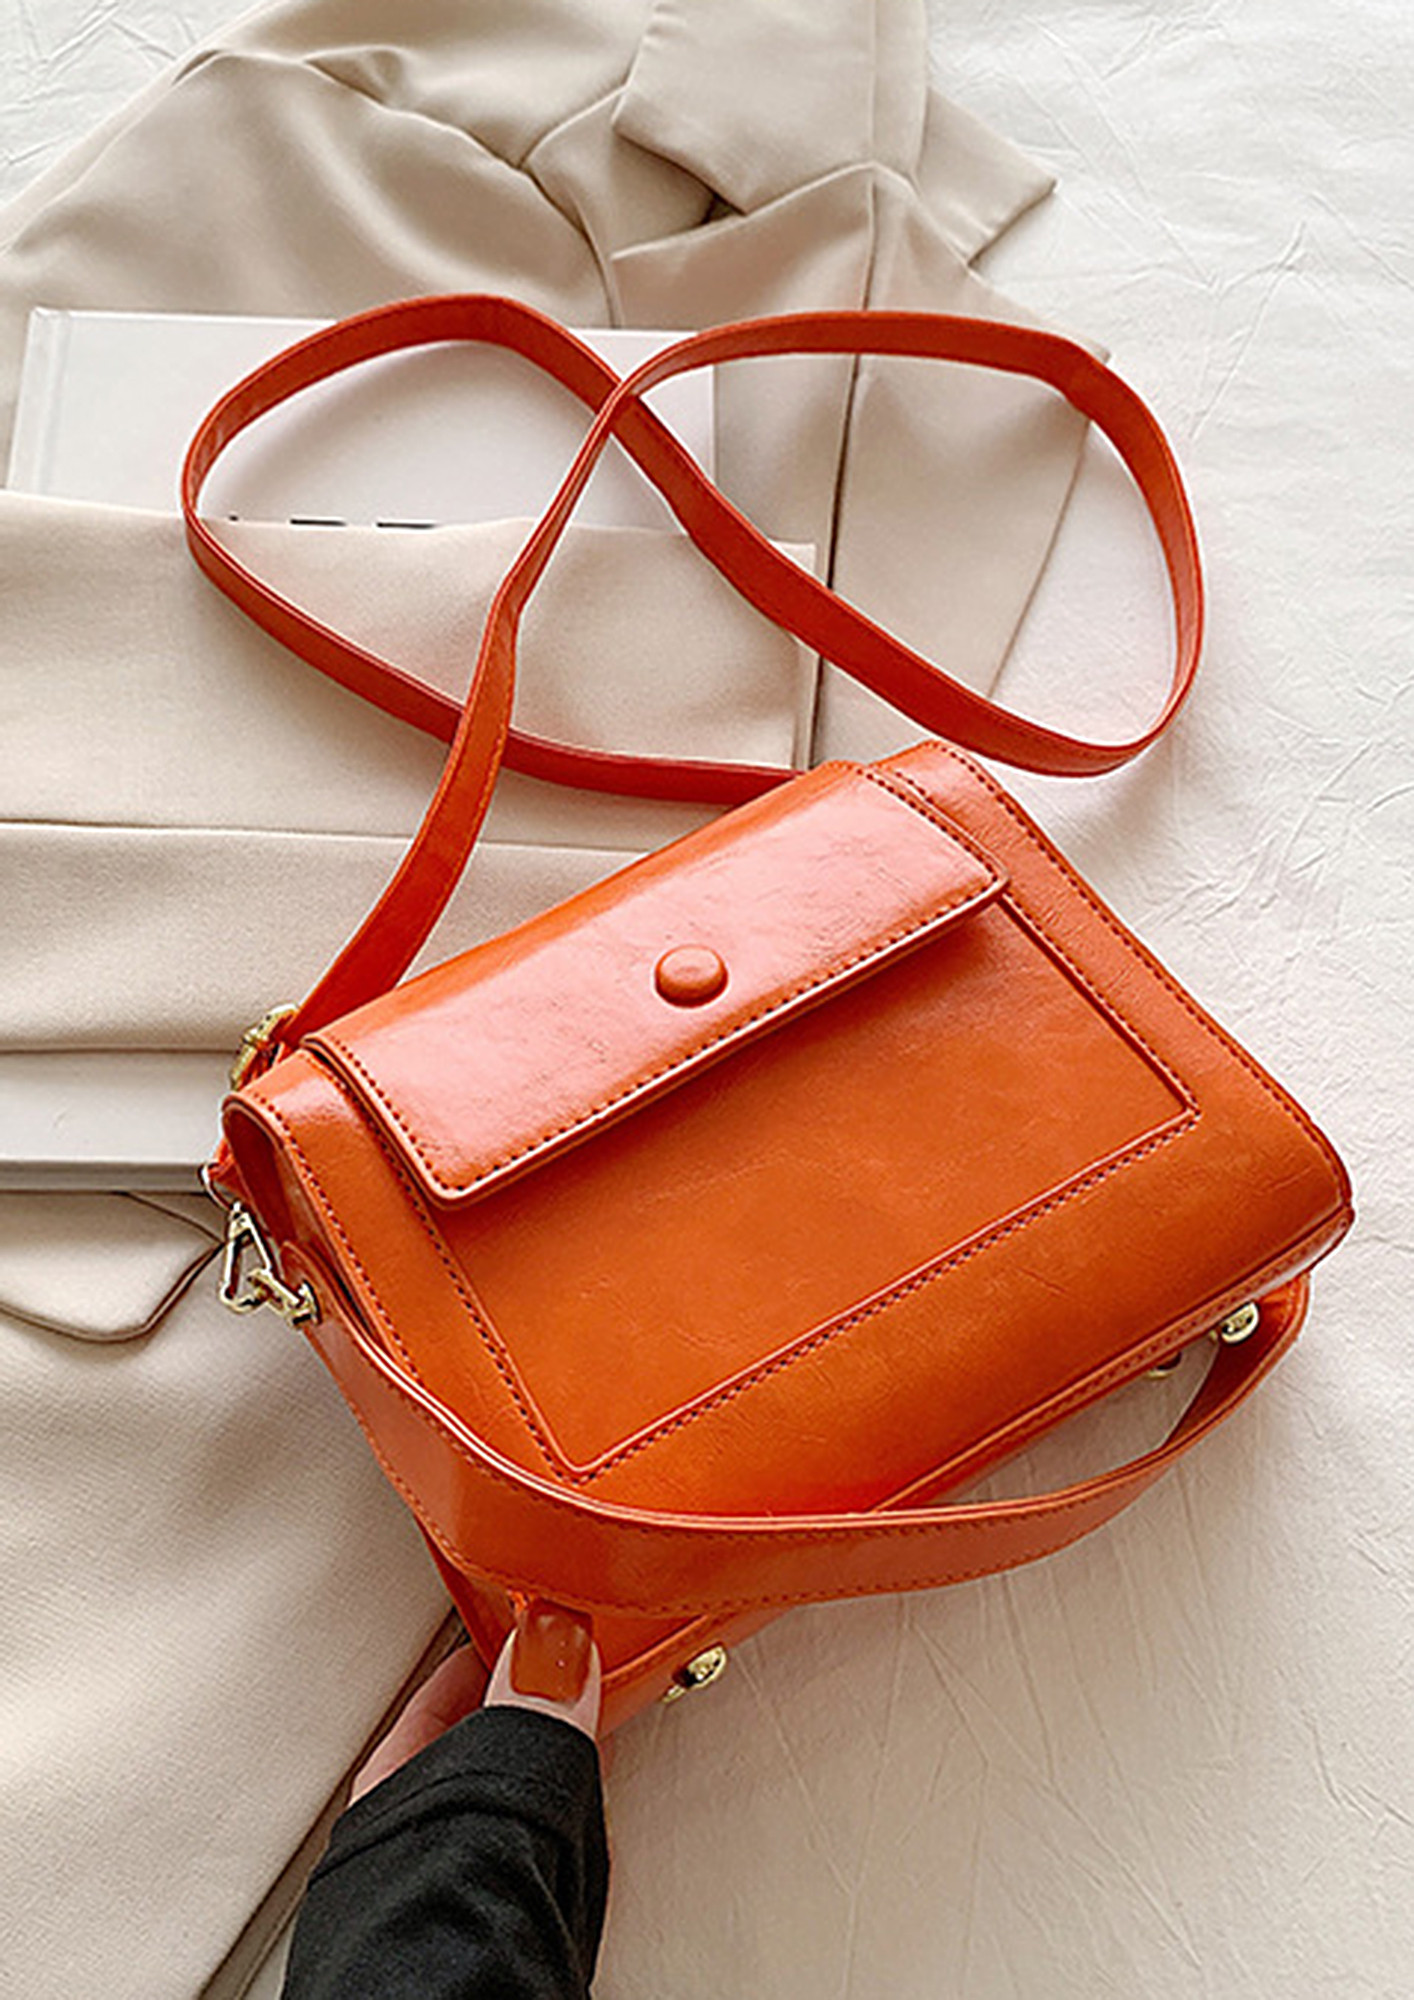 Used in Japan Fashion]Columbia Black Orange Bags | eBay